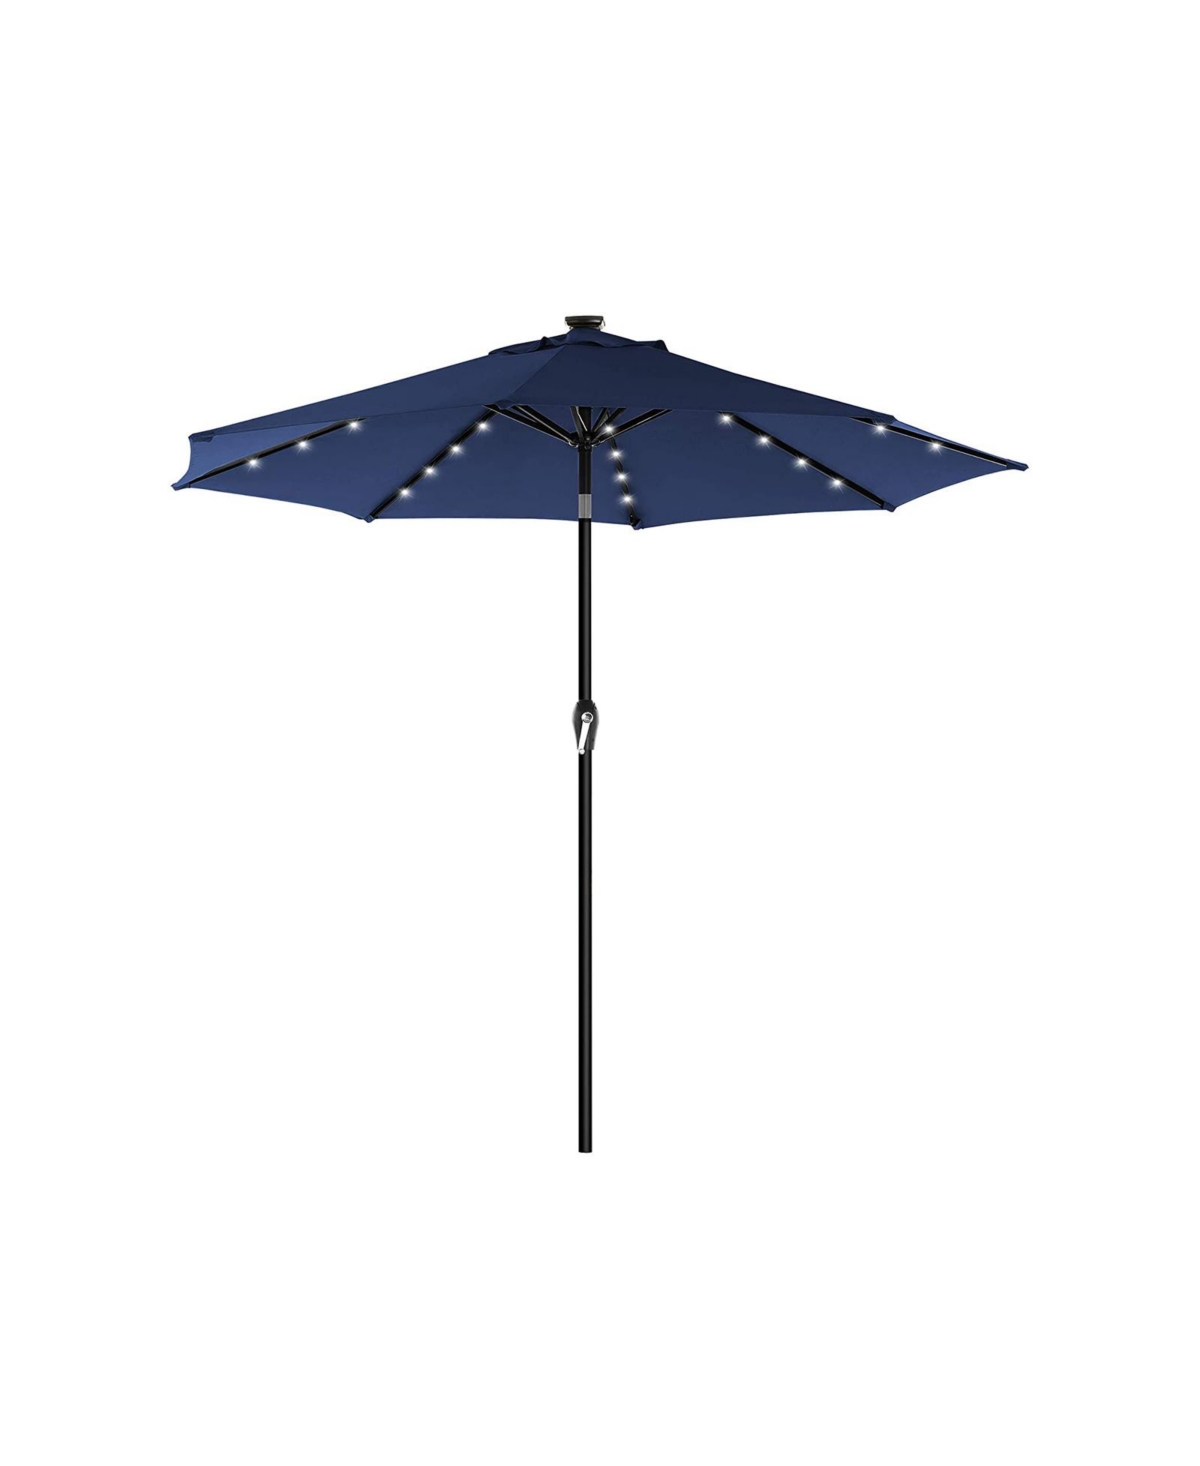 Solar Lighted Patio Outdoor Umbrella, 32 Led Lights, with Tilt and Crank Mechanism - Beige